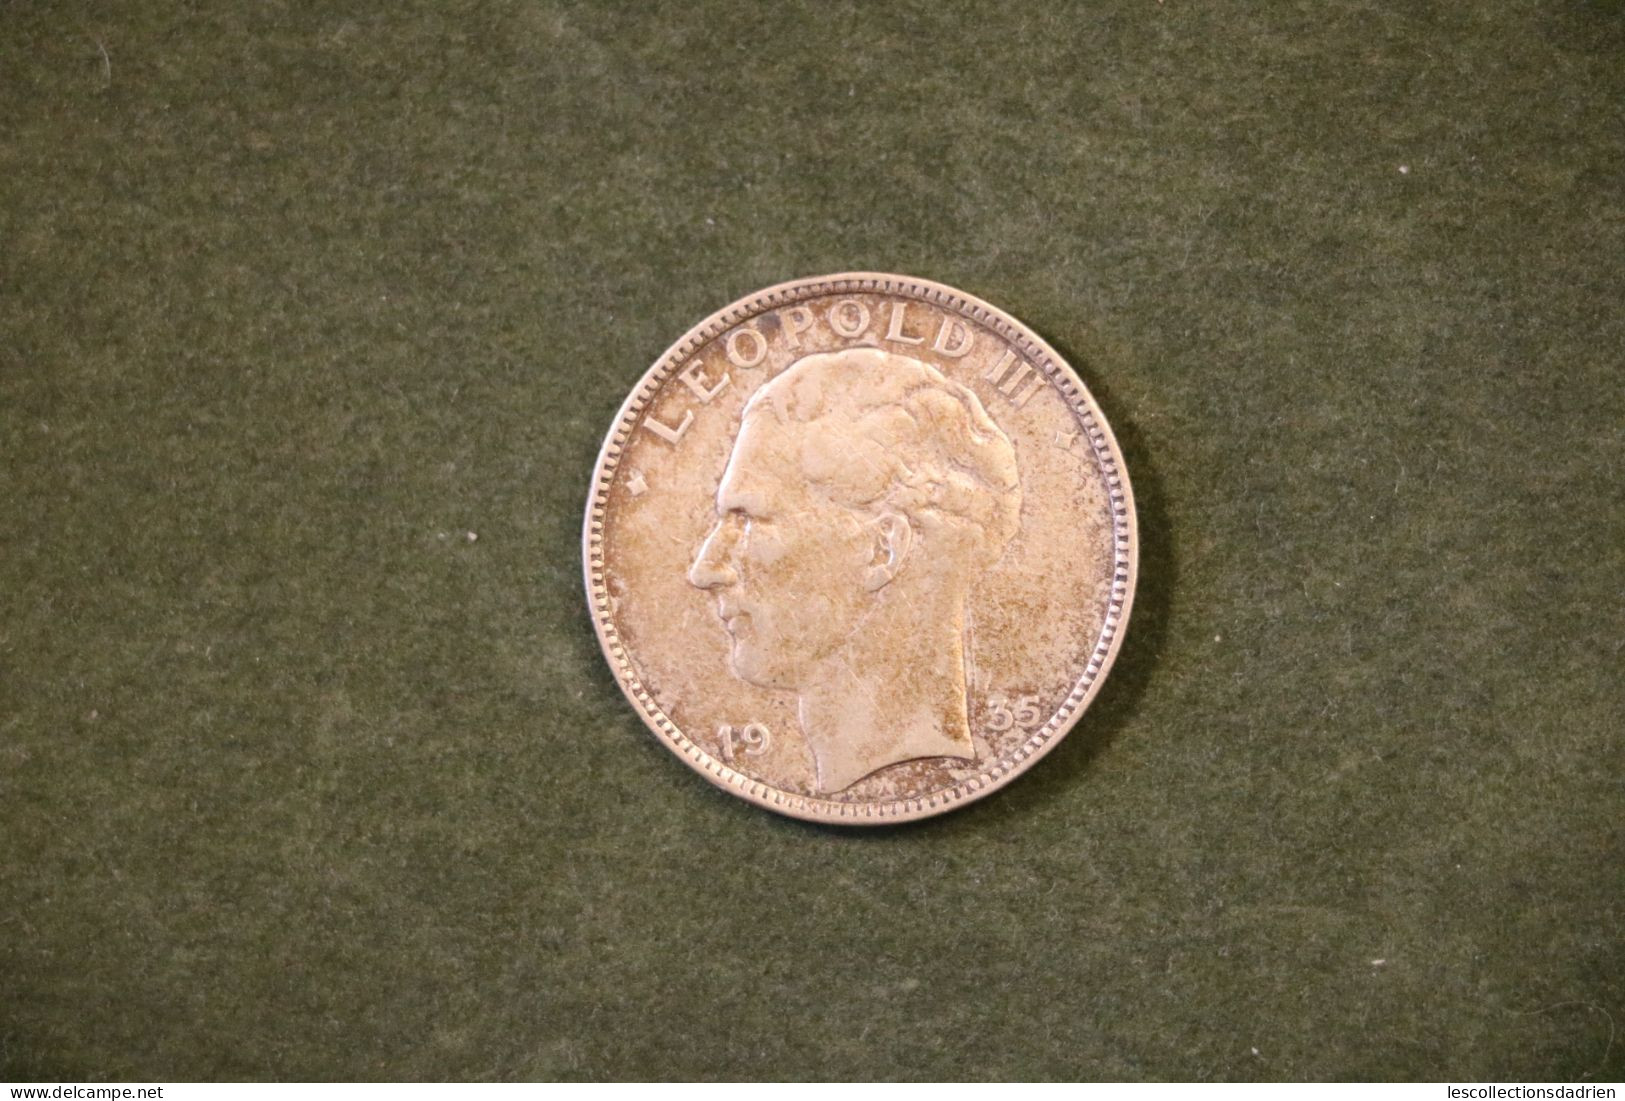 Pièce En Argent Belgique 20 Francs 1935  -  Belgian Silver Coin /2 - 20 Frank